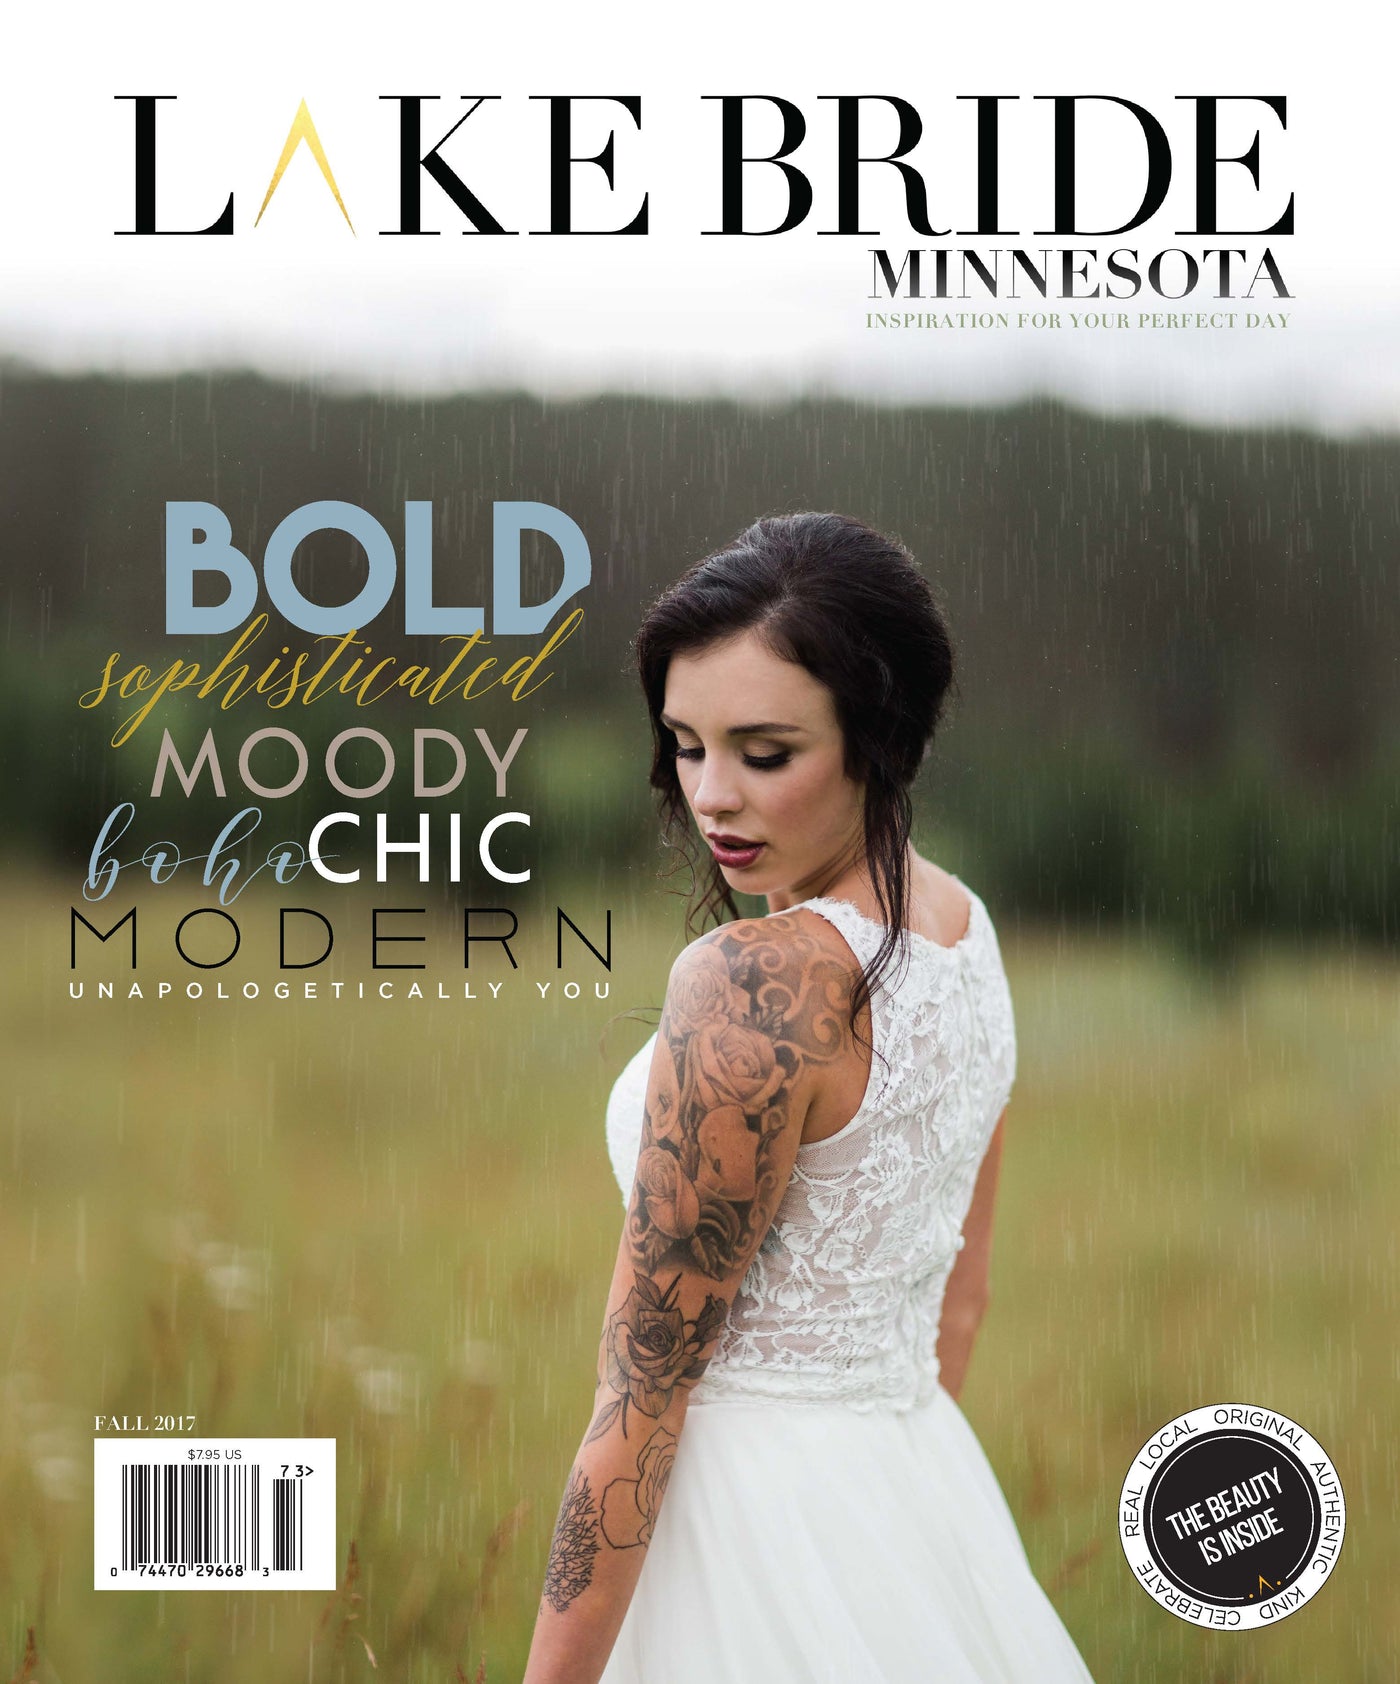 Lake Bride Magazine: Volume 2, Issue 3 - The Lake and Company